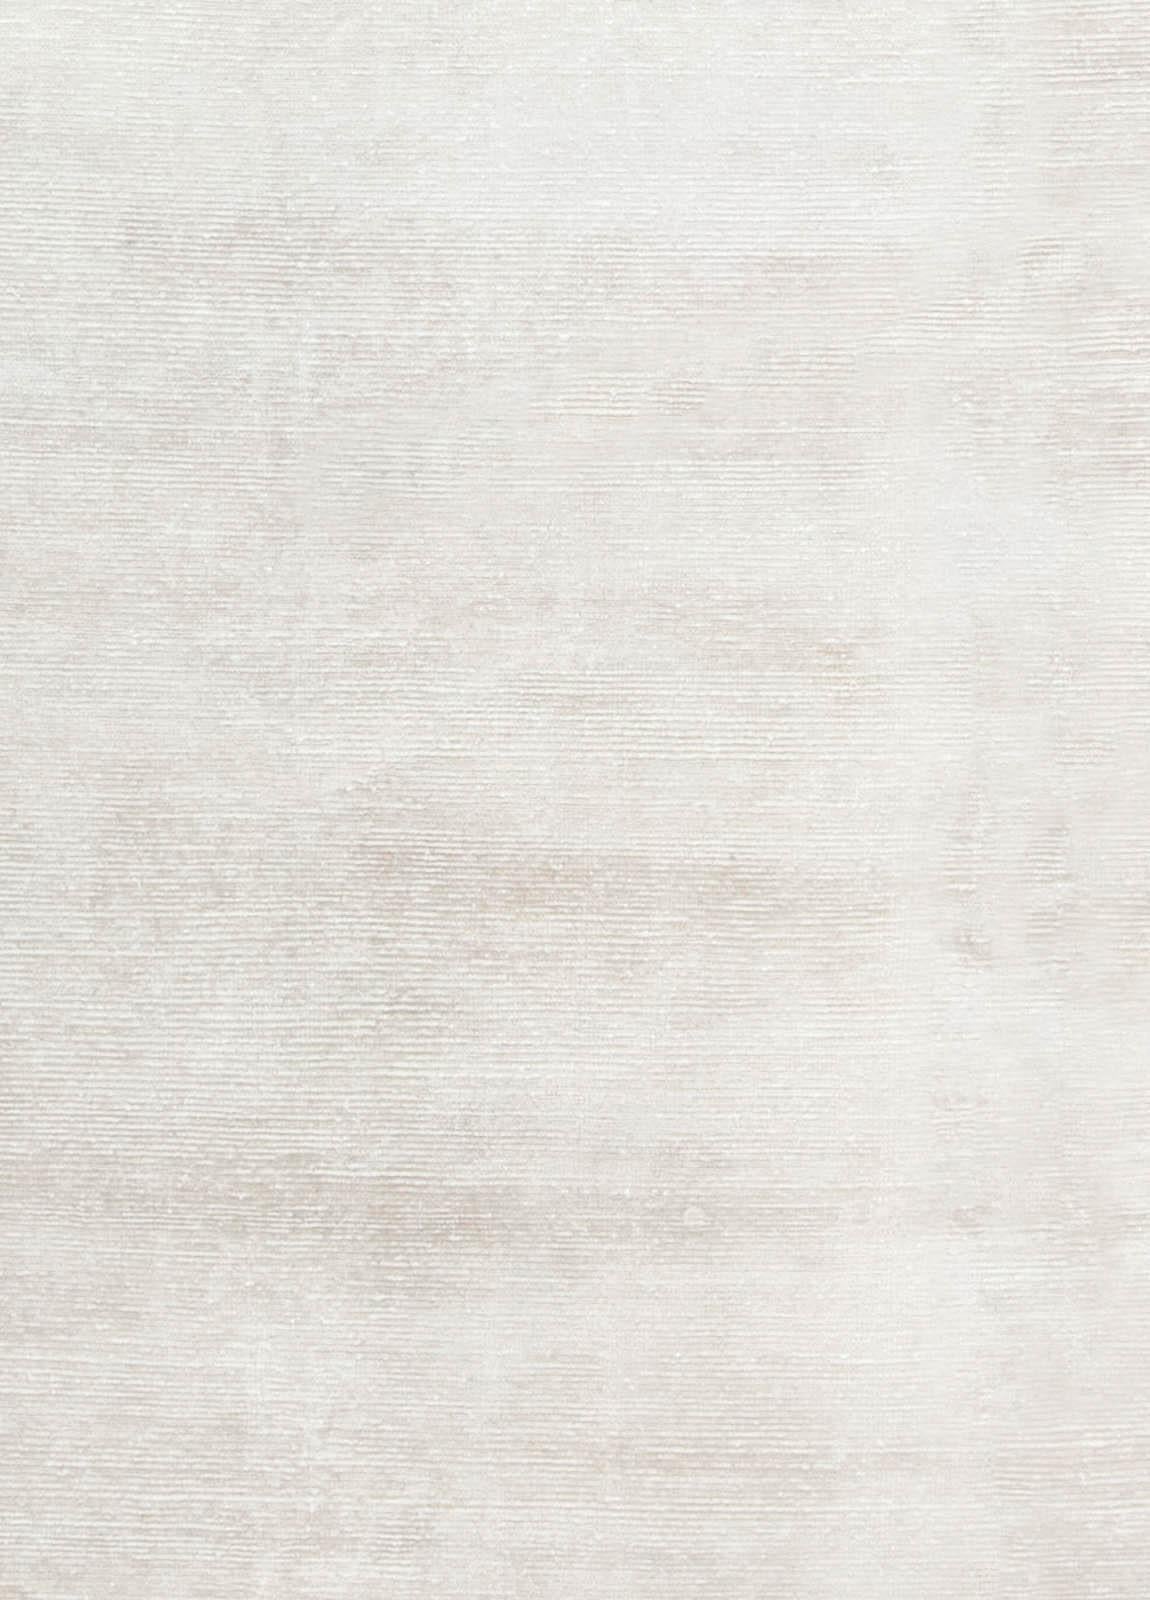 High-quality Contemporary white and beige handmade rug by Doris Leslie Blau.
Size: 12'0